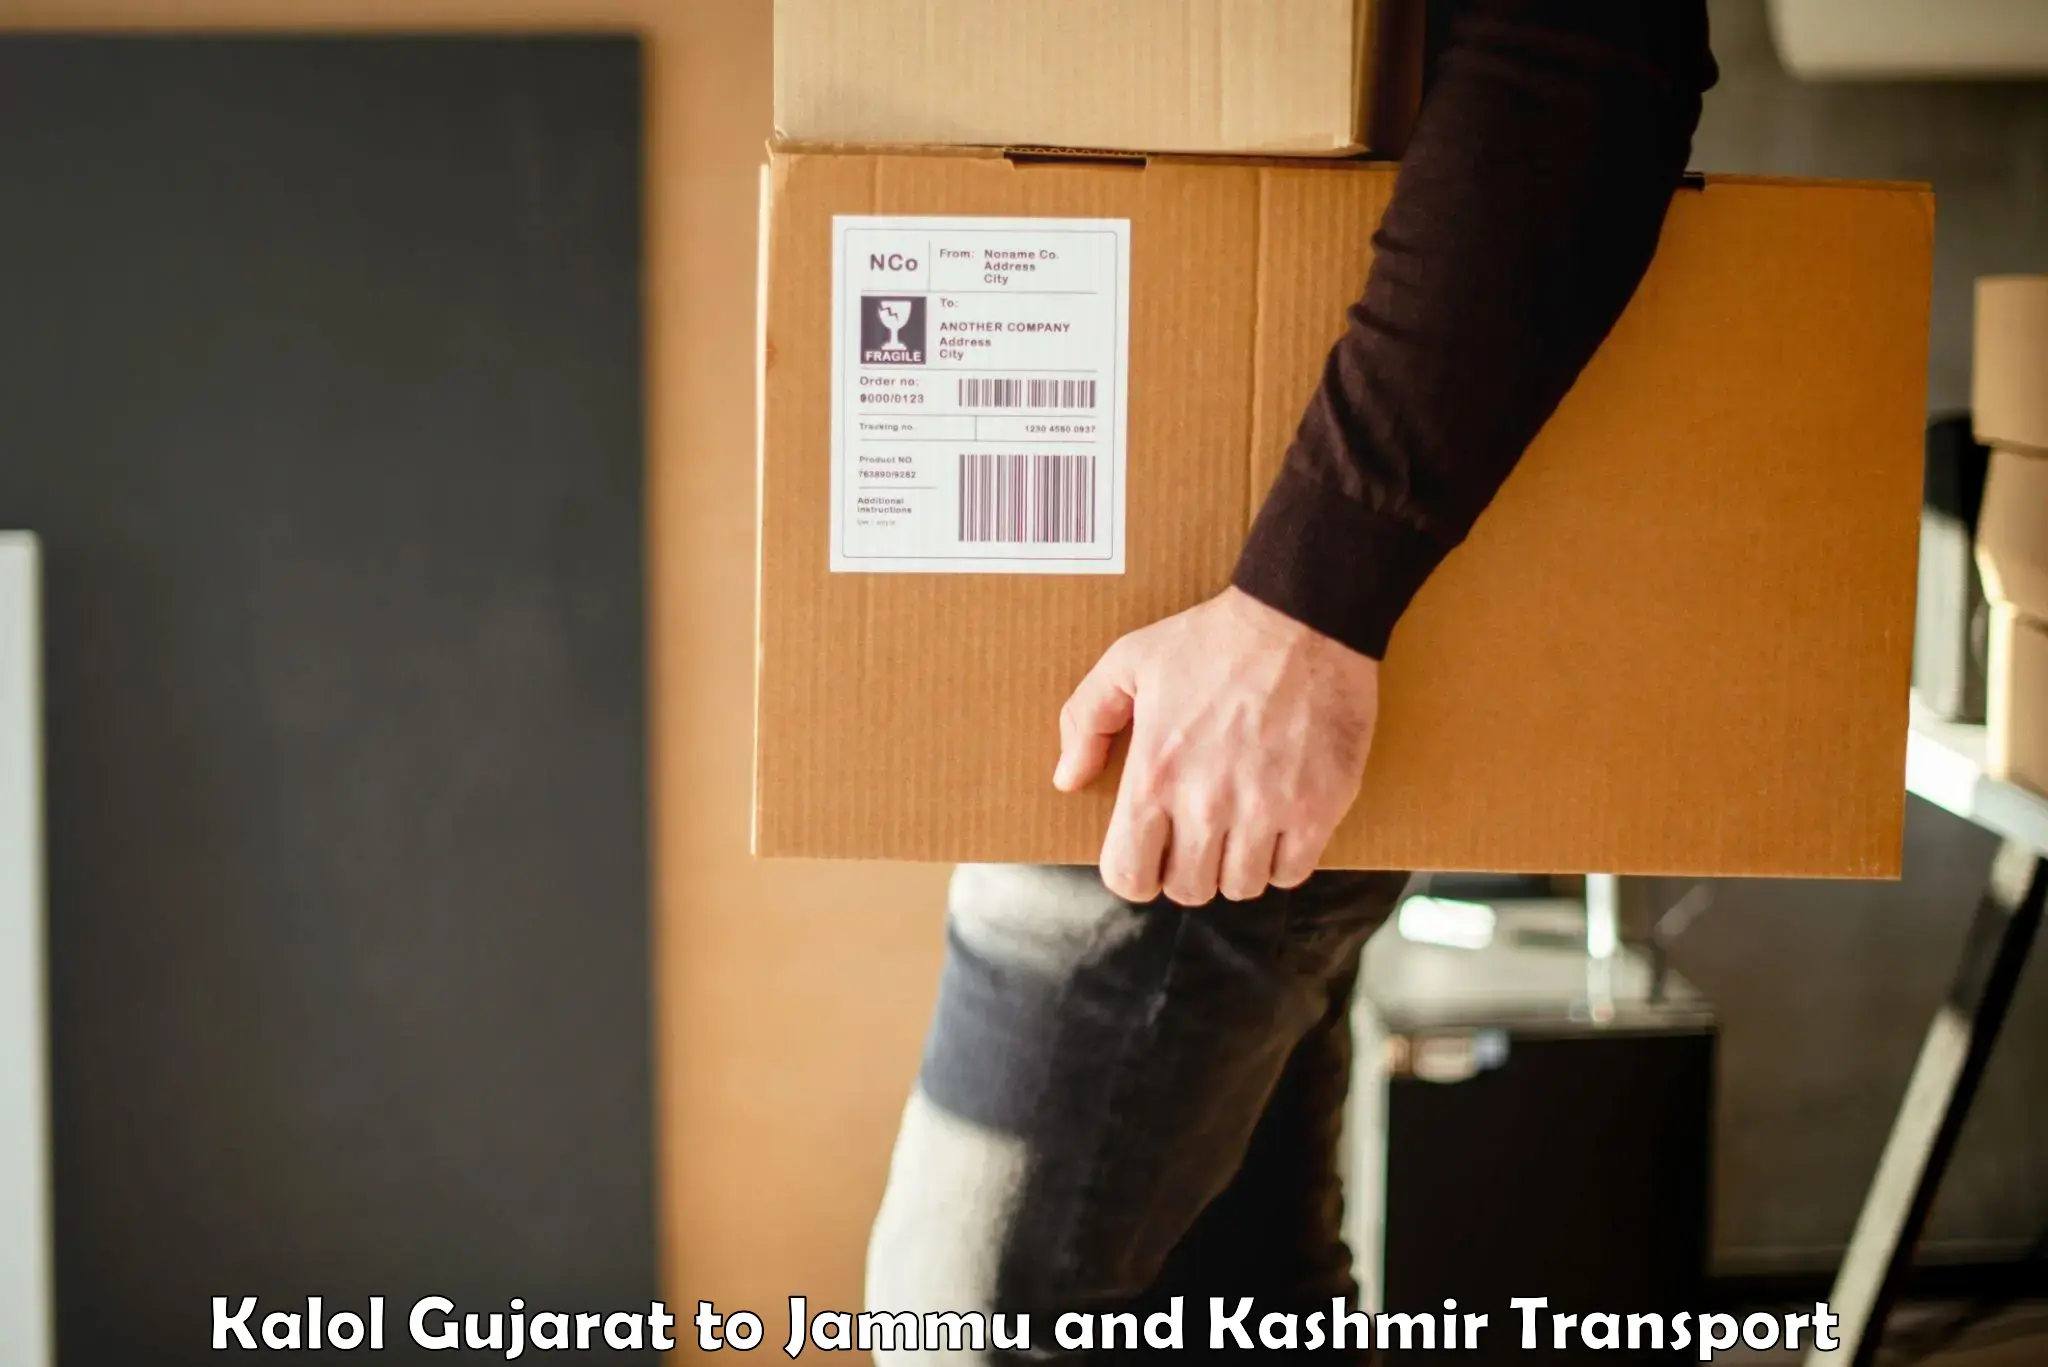 Furniture transport service Kalol Gujarat to Bohri